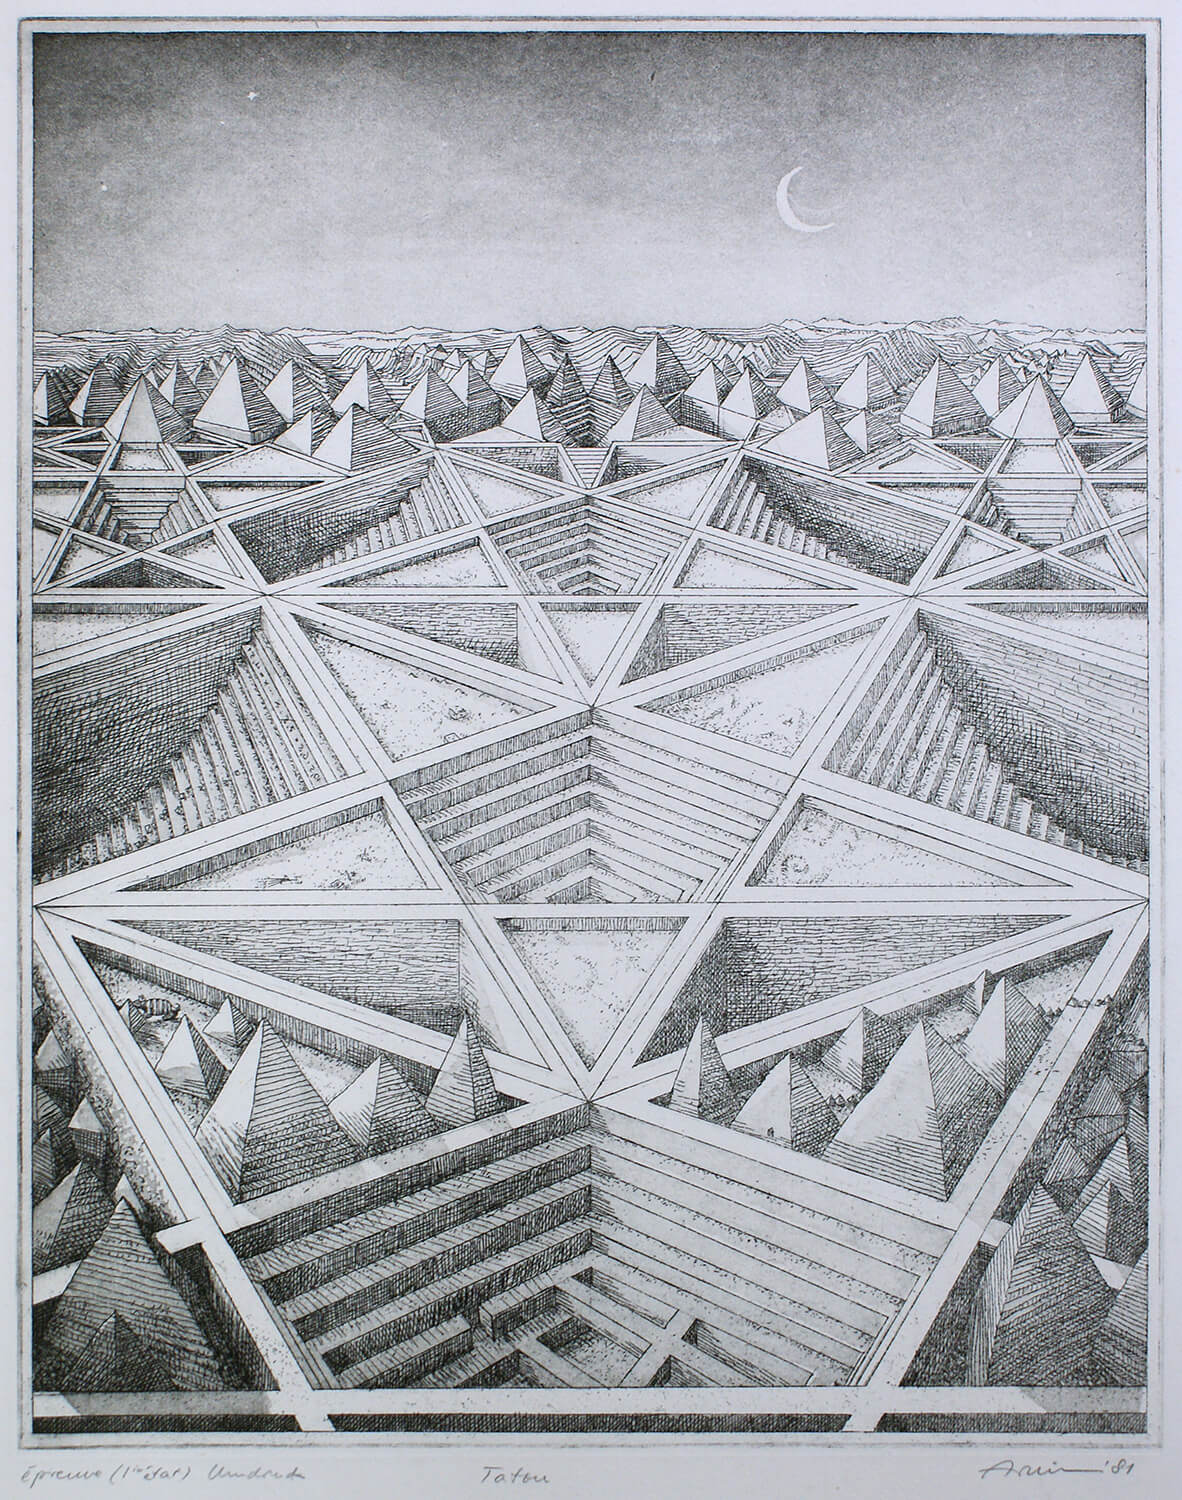 Bettina von Arnim, Tatou, 1981, Umdruck, e. a., 1. Zustand, Bild: 48,5 x 40 cm, Blatt: 67,5 x 52 cm